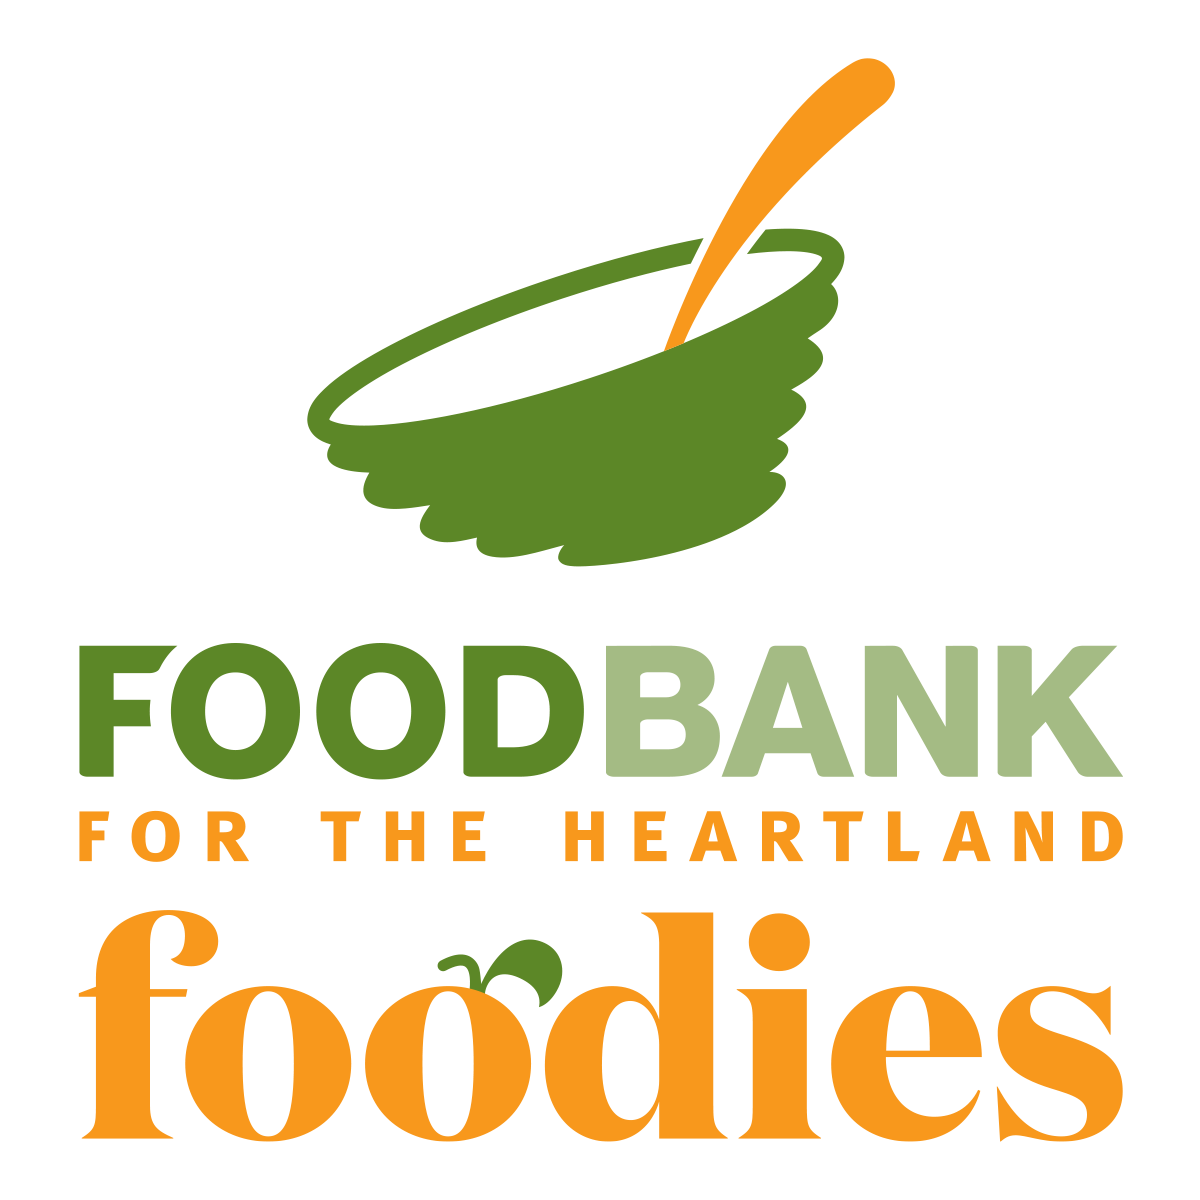 Food Bank for the Heartland Foodies logo